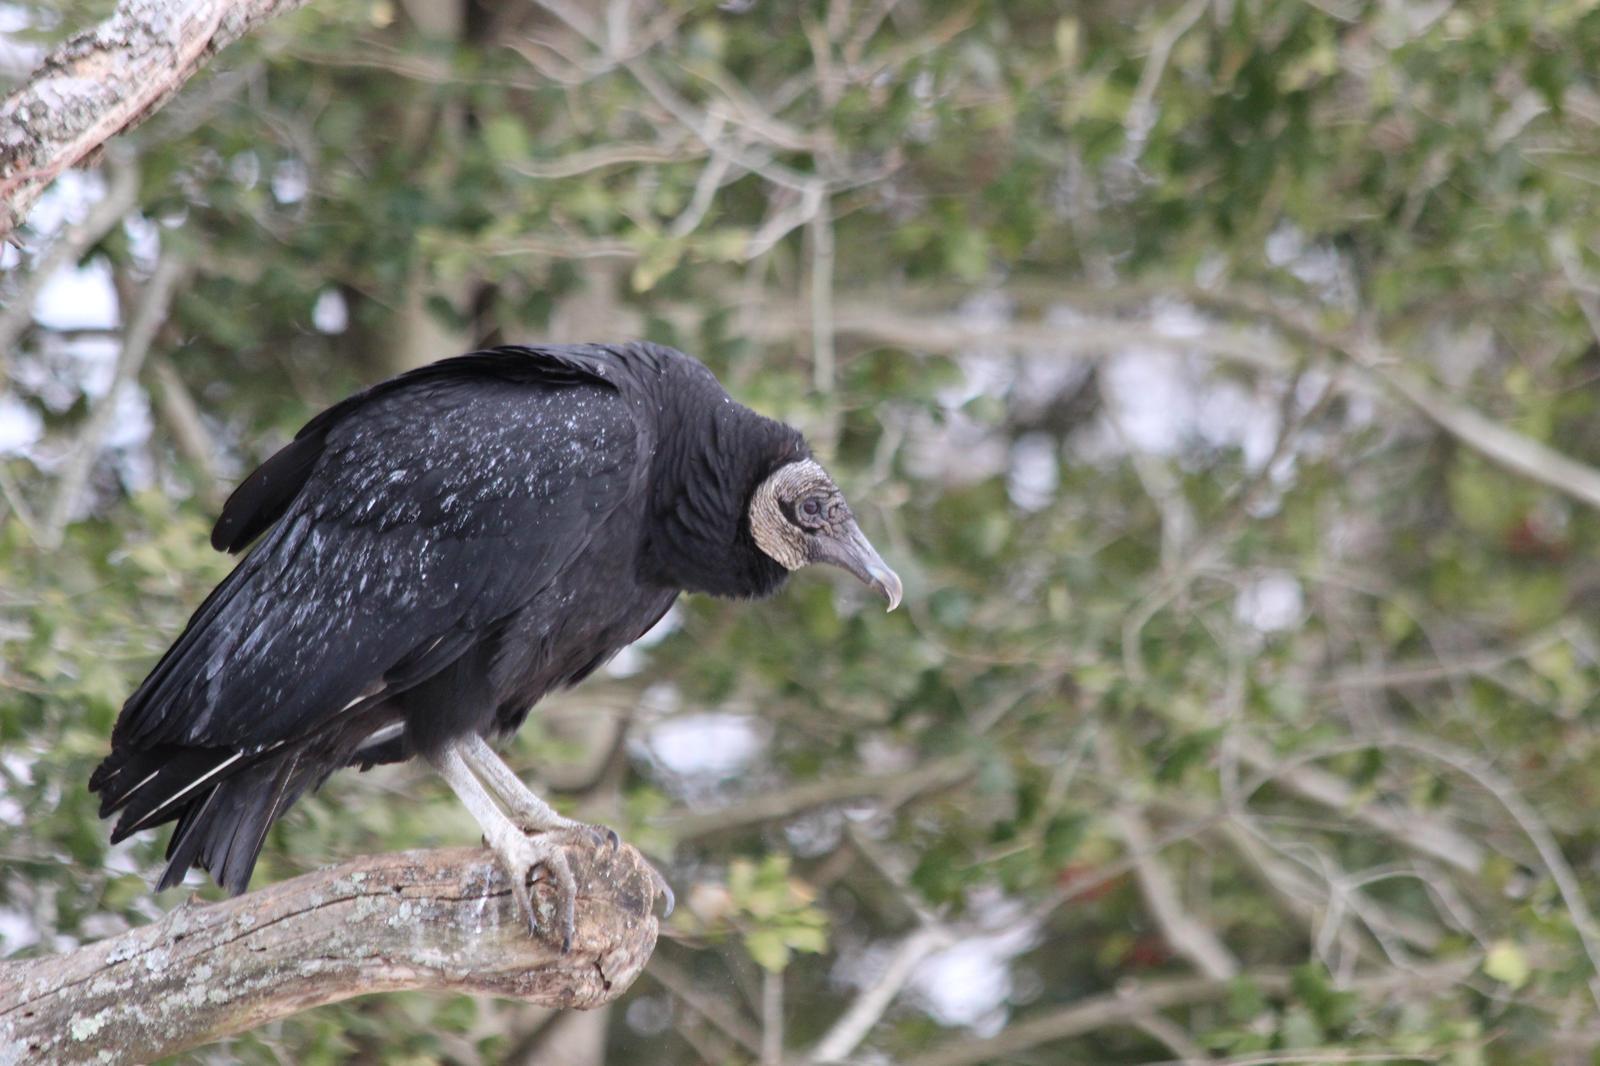 Black Vulture Photo by Darrin Menzo